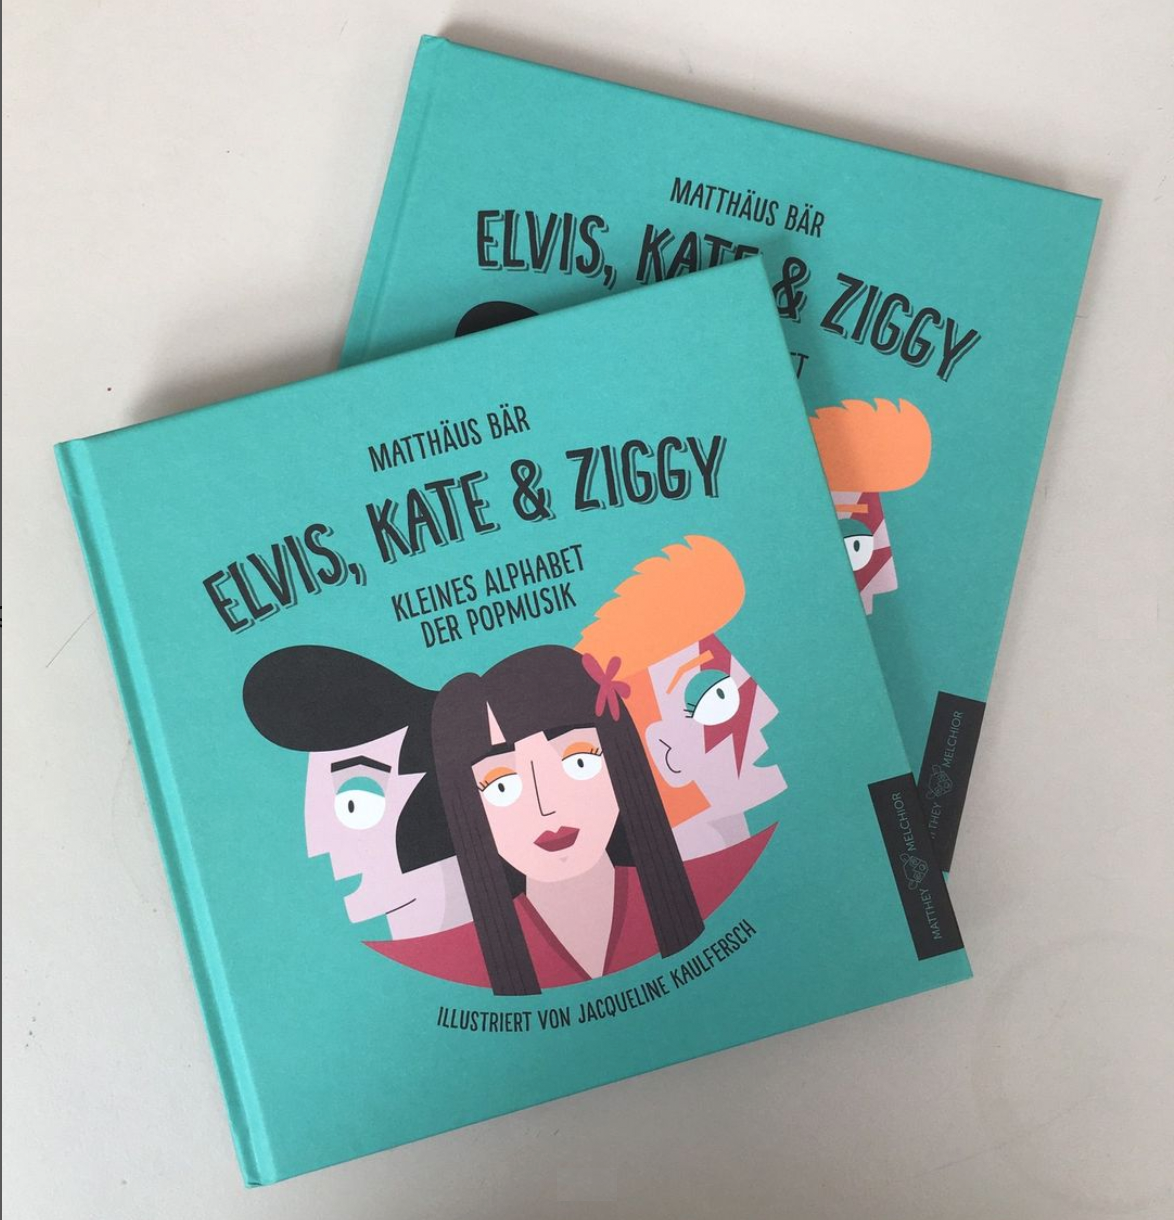 Elvis, Kate & Ziggy